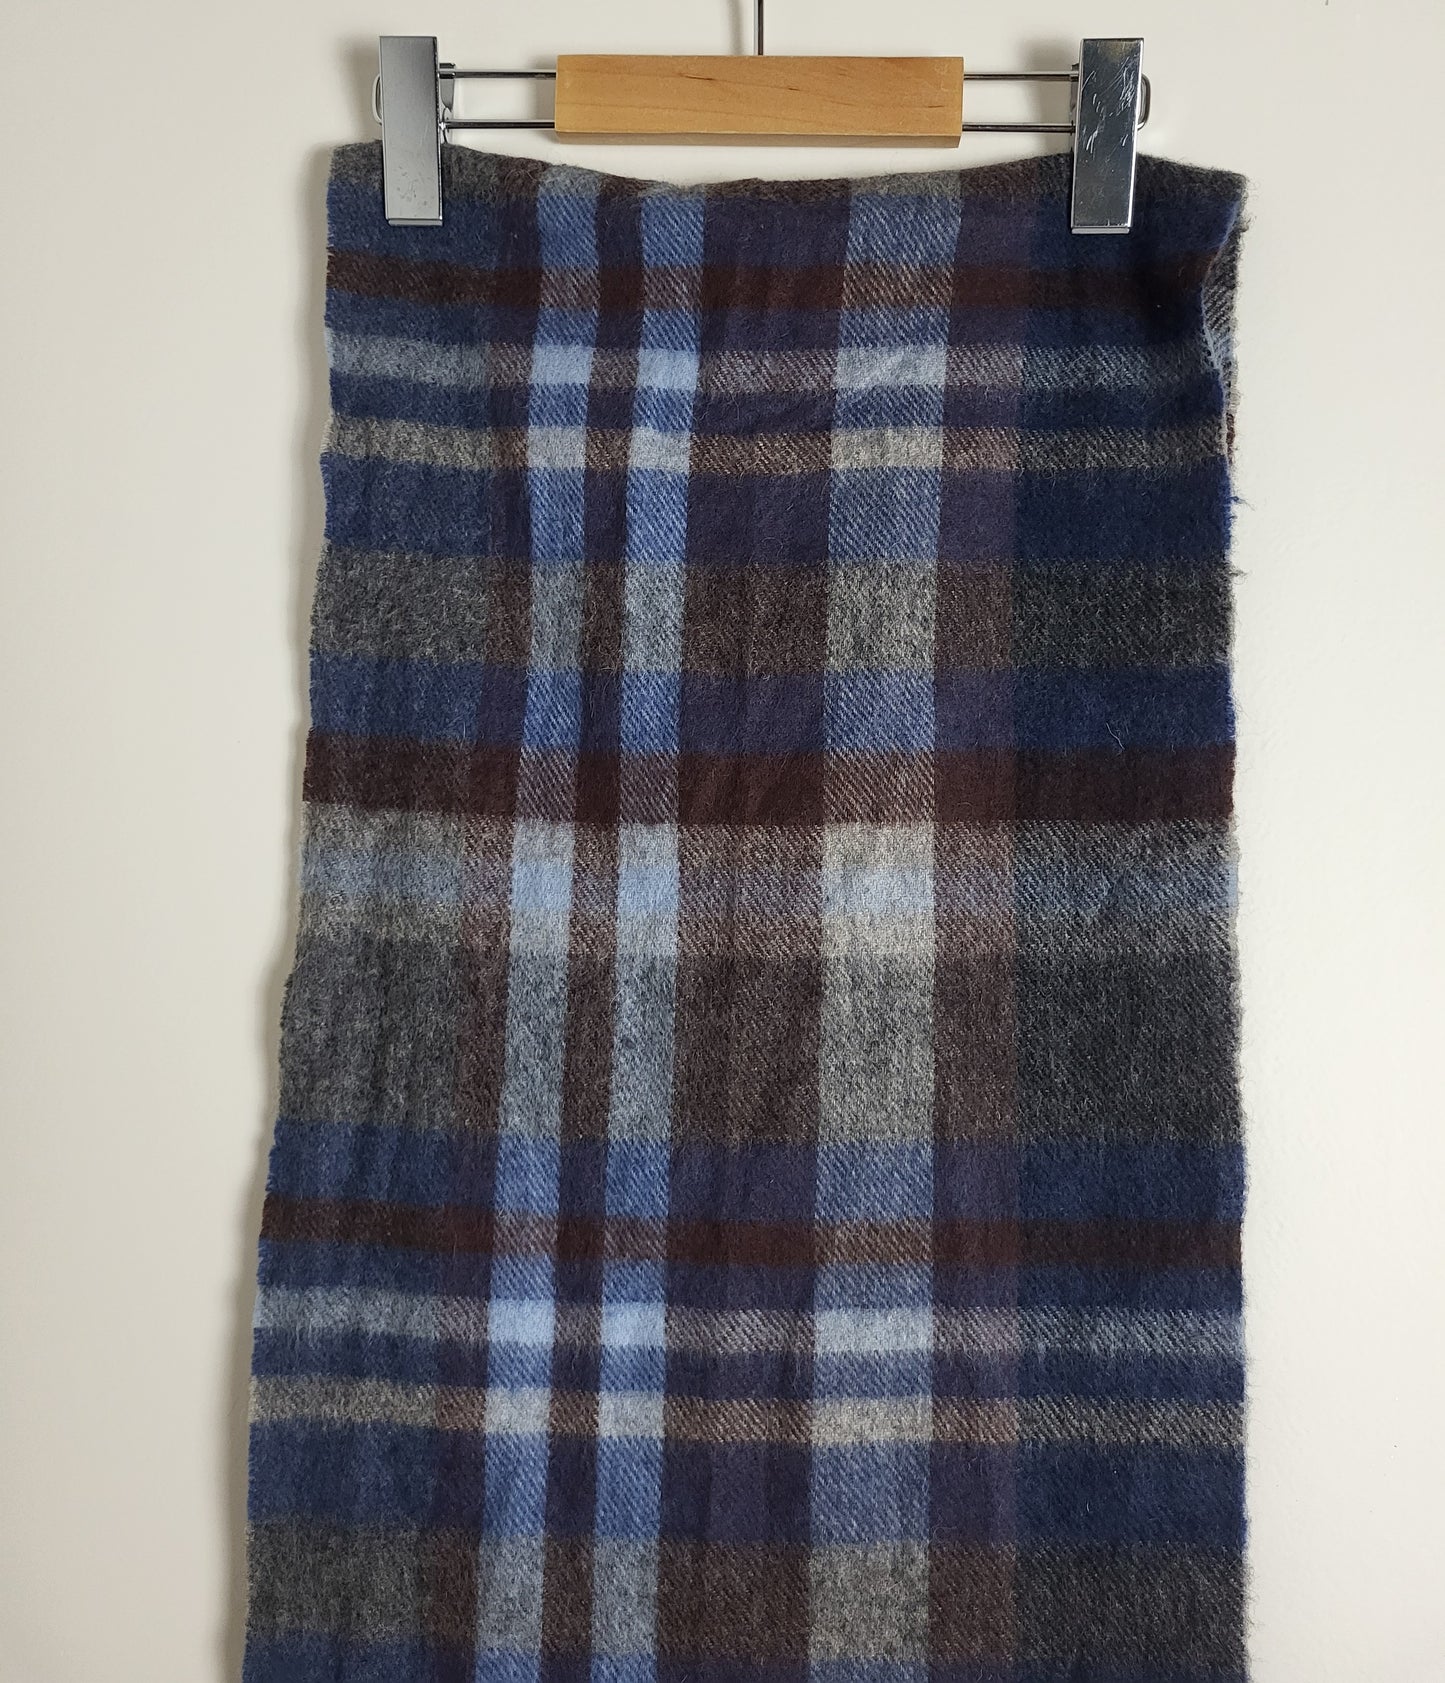 Burberry - Vintage Schal - Blau / Grau Tartan - Kaschmir - 160 x 30